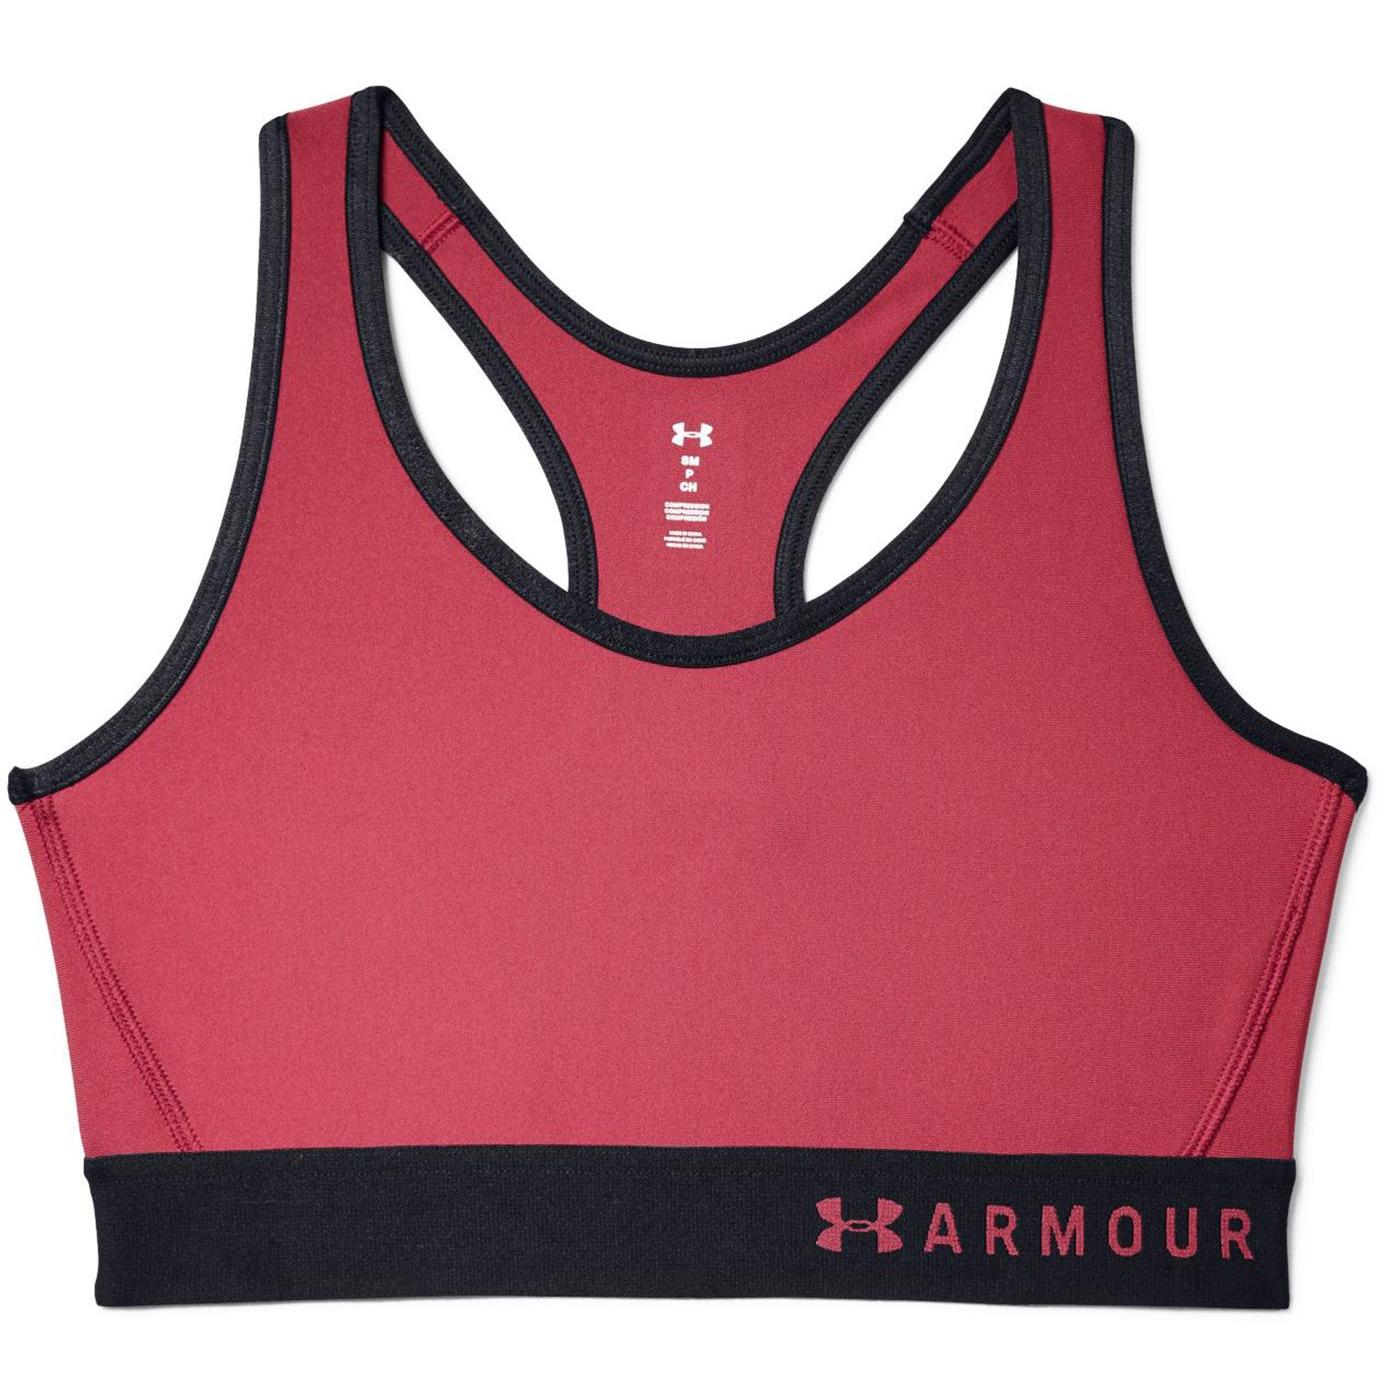 Топ беговой Under Armour 2019 Armour ® Mid Support impulse pink / black / impulse pink